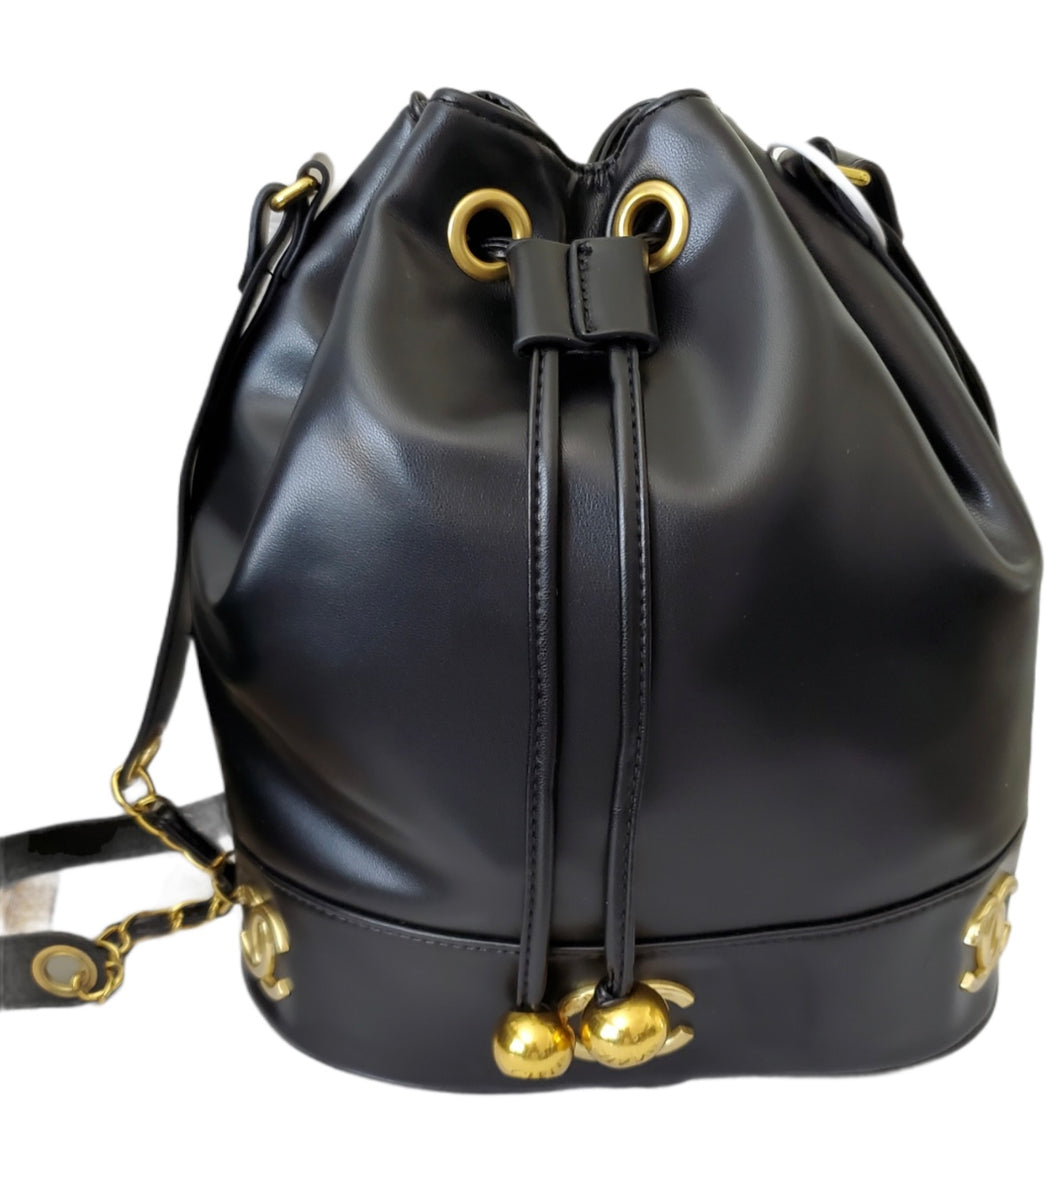 Fashion black small backpack handbag bag